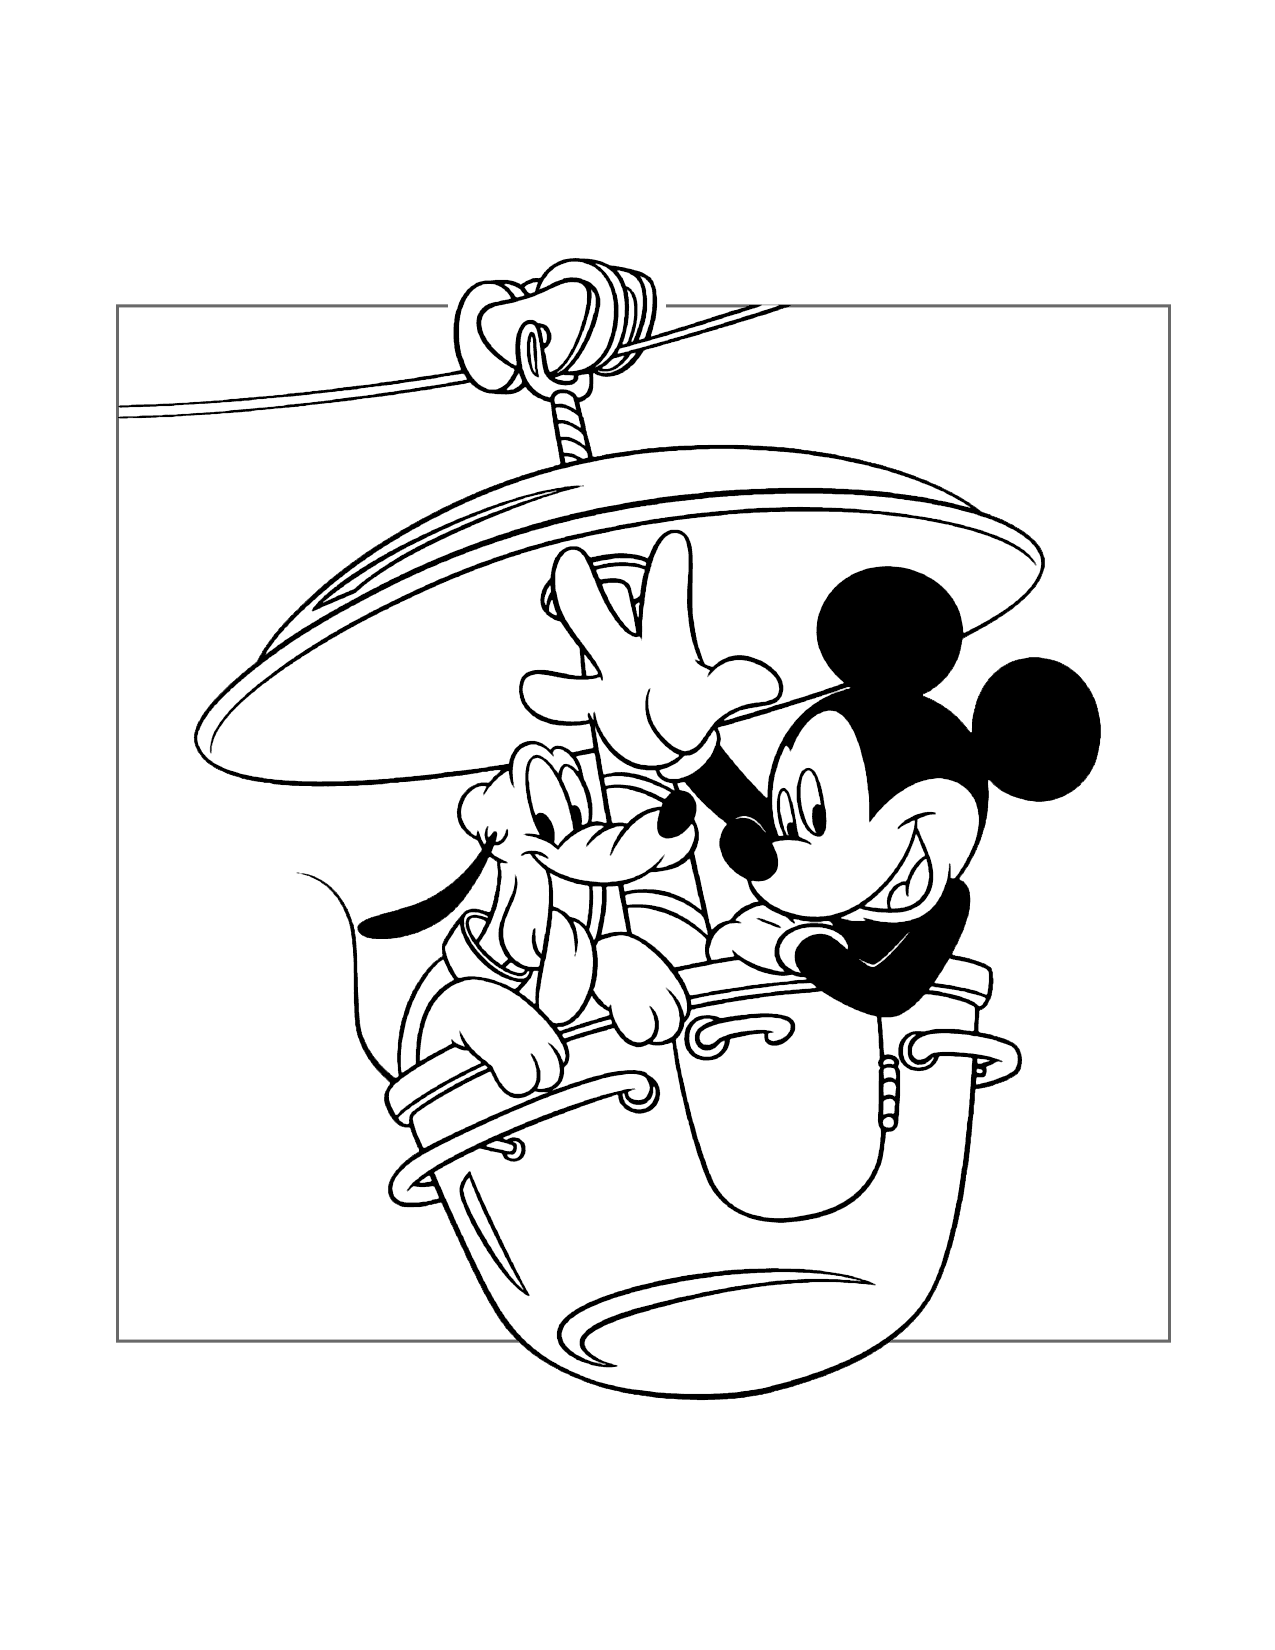 Pluto And Mickey At Disneyland Coloring Page